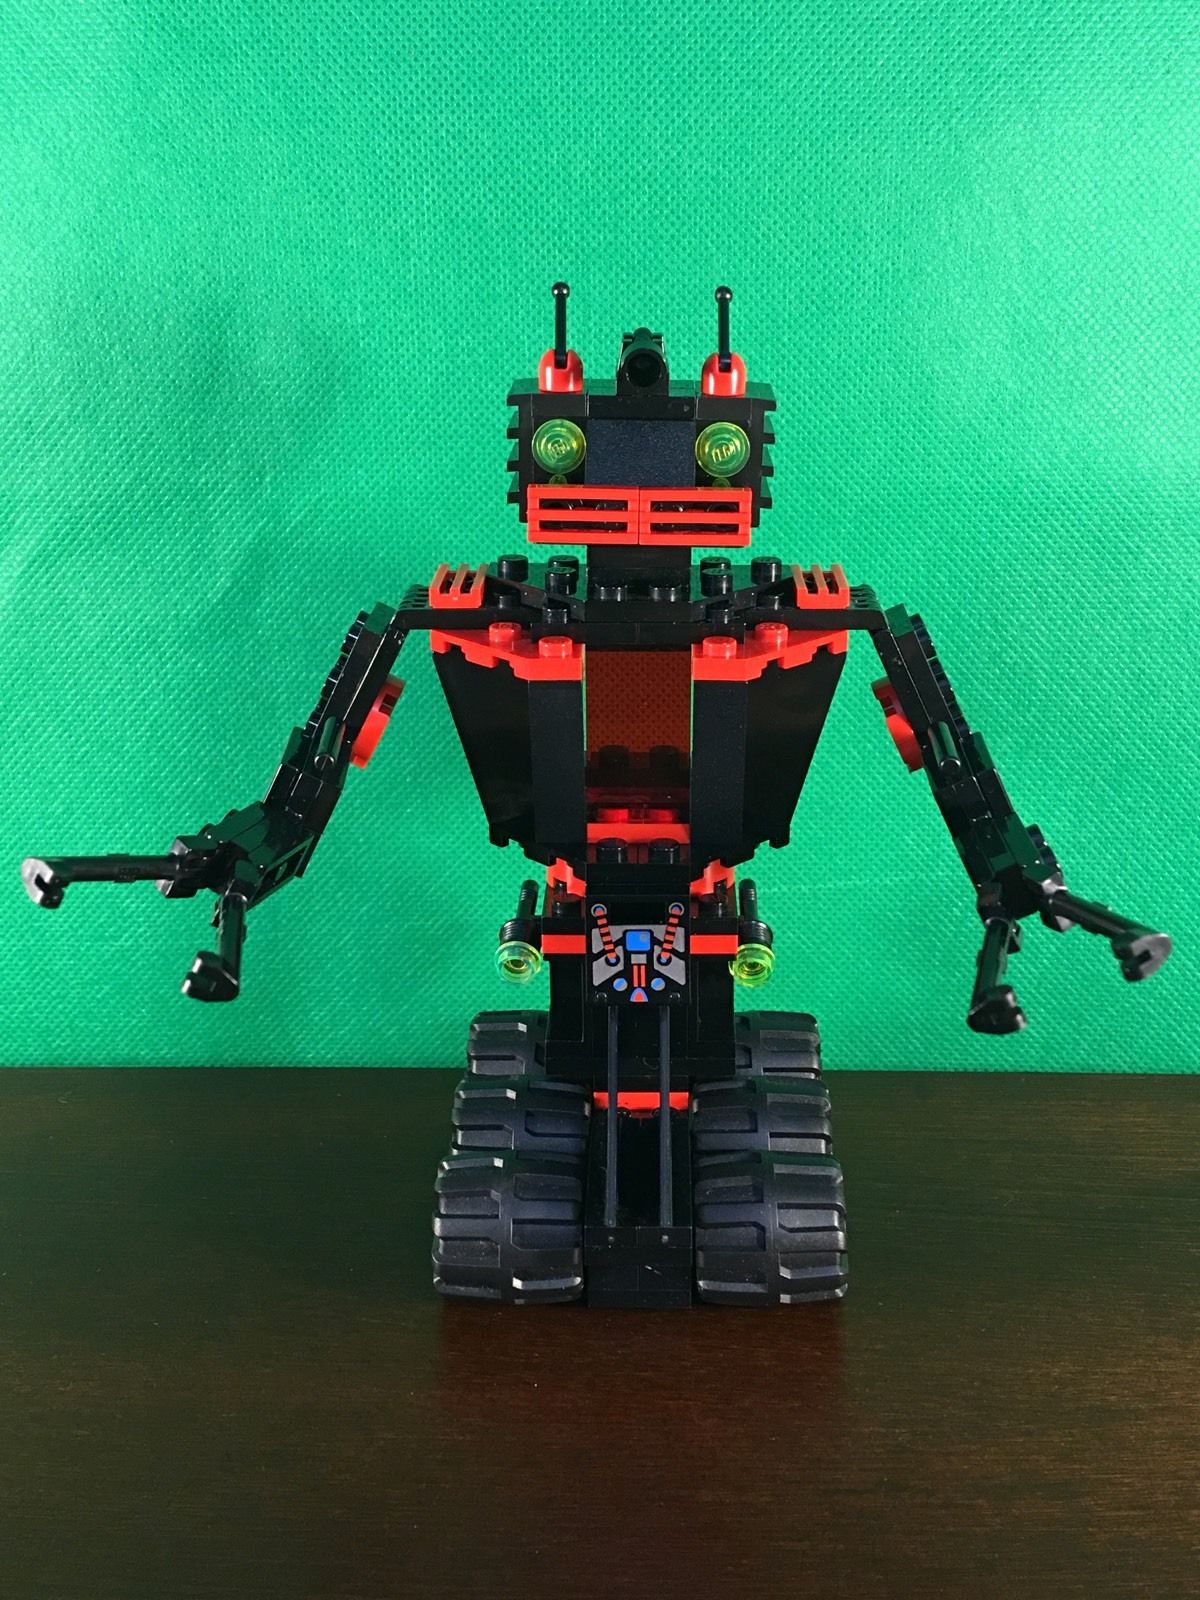 Ryan Walls on Twitter: SALE VINTAGE LEGO 6889 SPYRIUS RECON ROBOT #Lego #Space #Robot https://t.co/Zgqy5GffH1 https://t.co/6rOZD4utfV" / Twitter